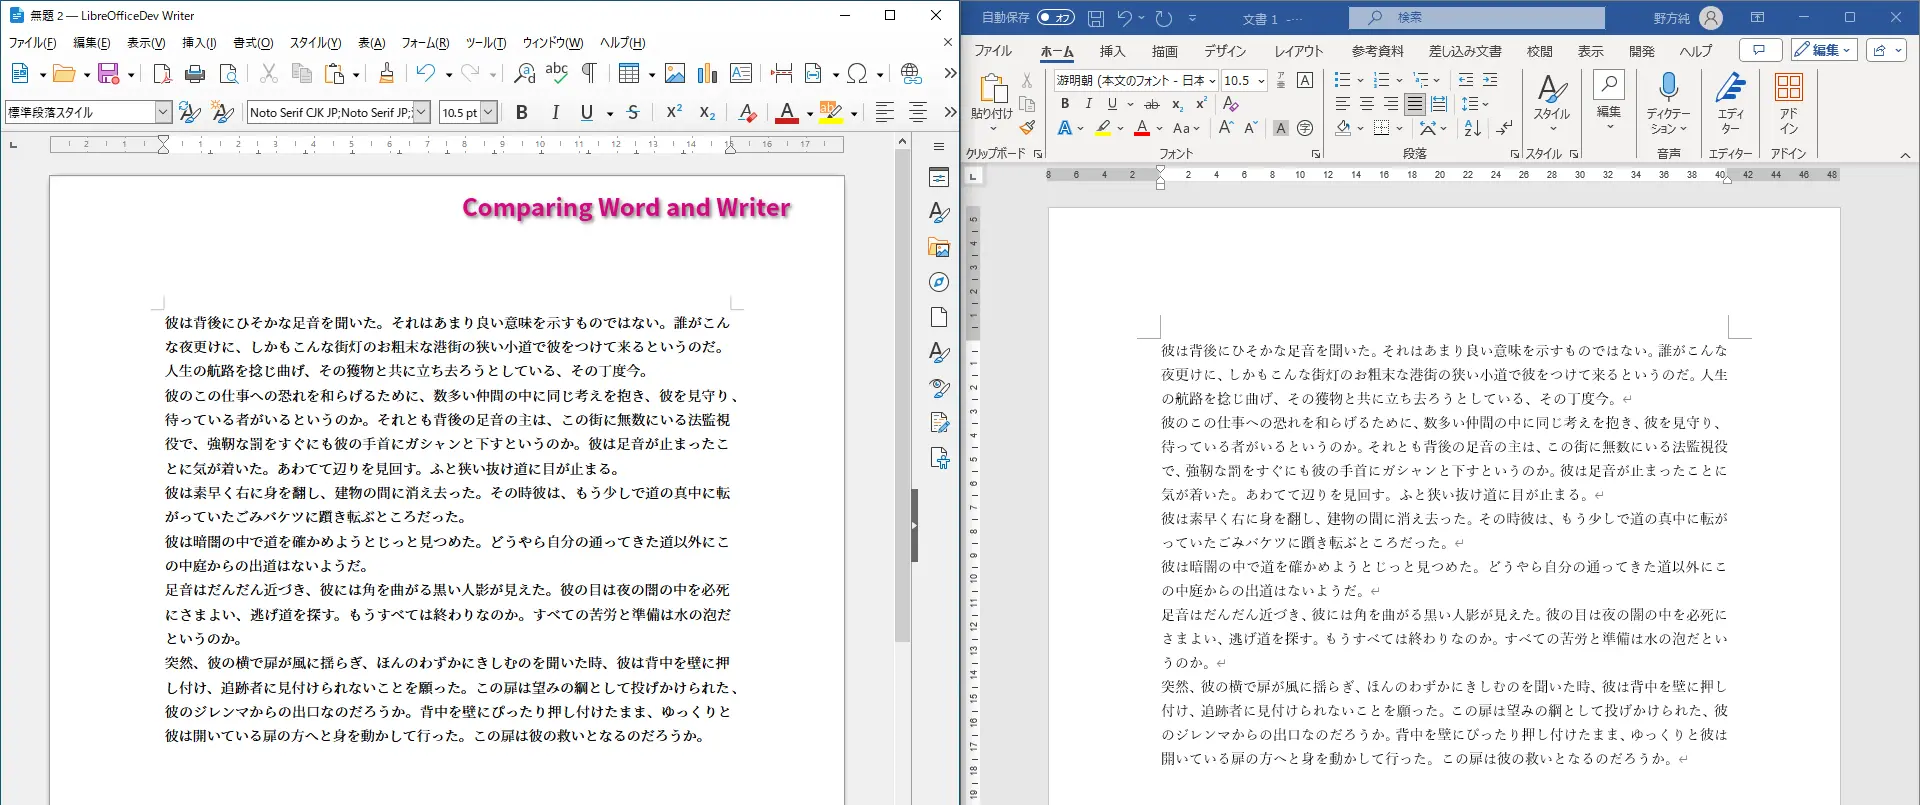 Screenshot comparing LibreOffice Writer and Microsoft Word